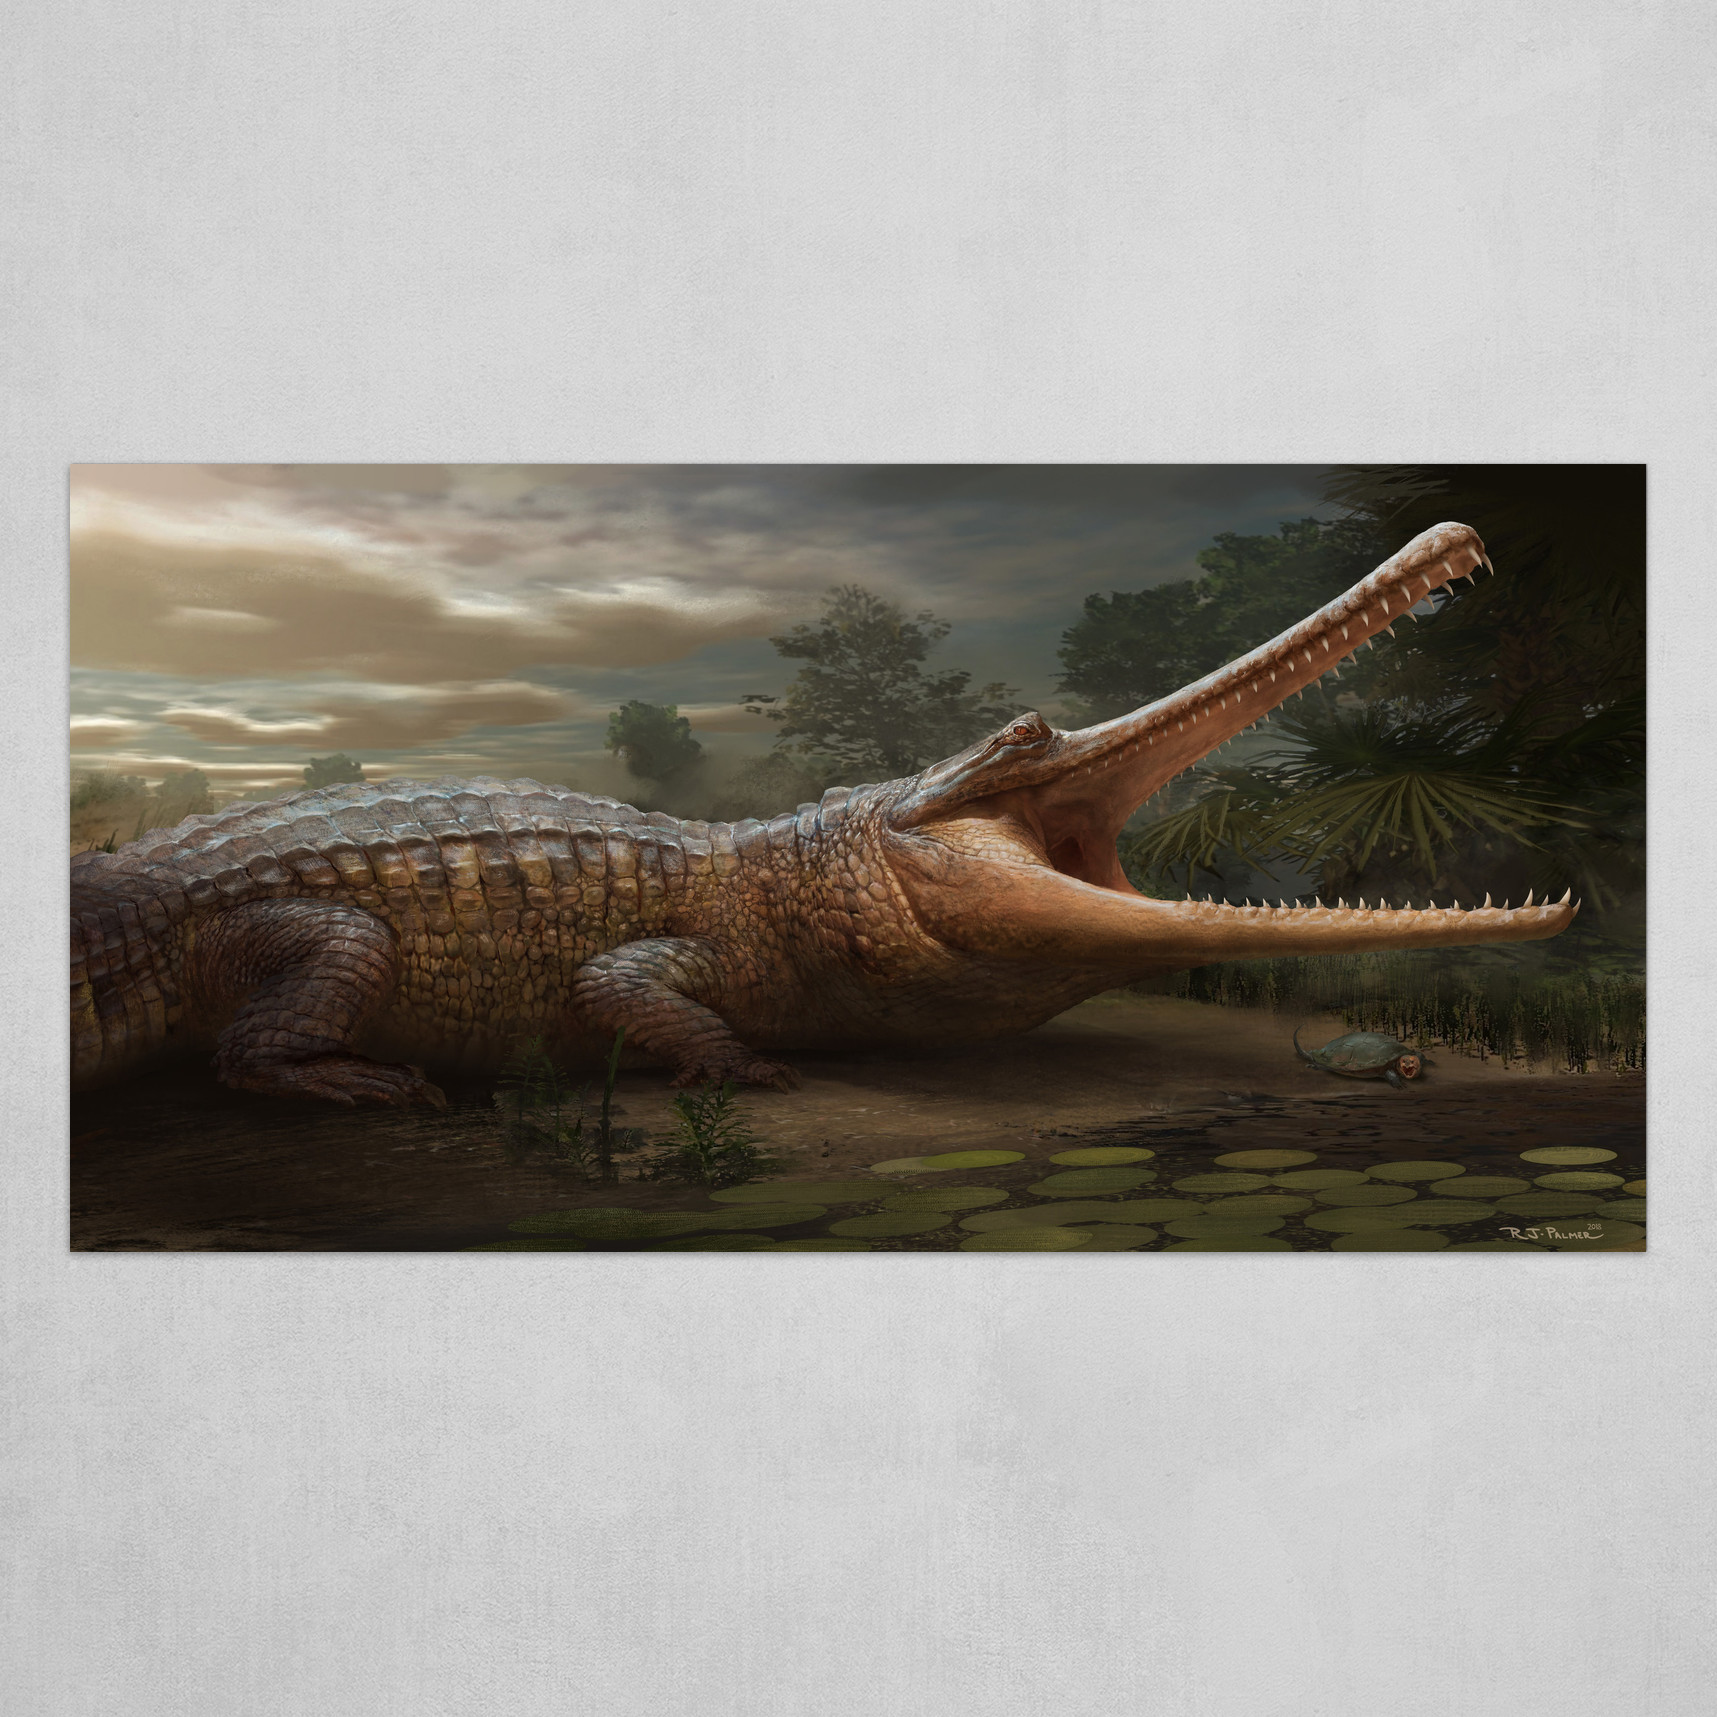 Saurian Thoracosaurus